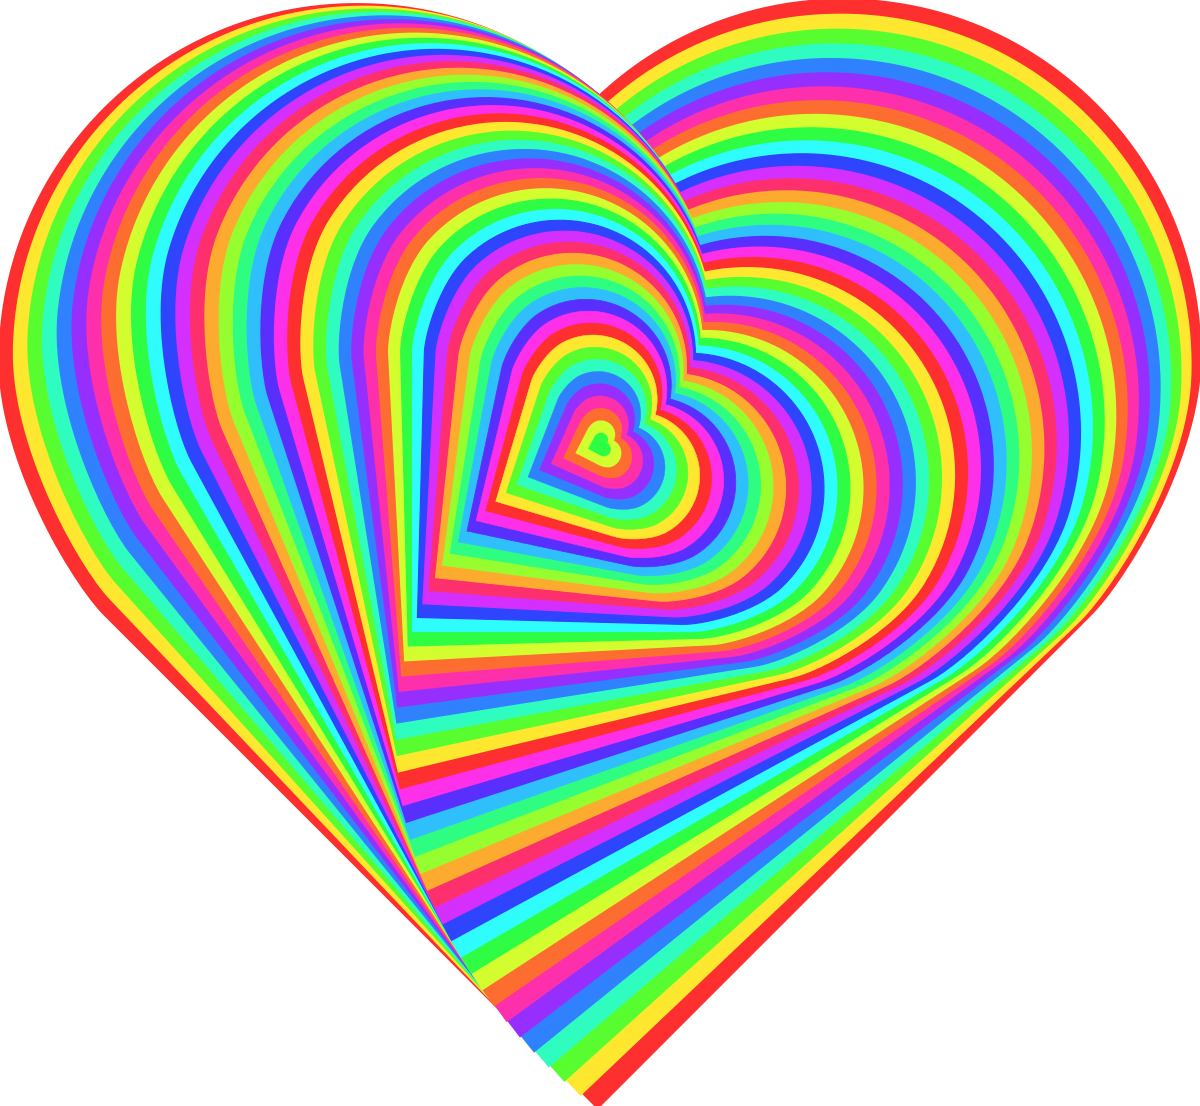 File:Love Heart rainbow 01.svg - Wikipedia.